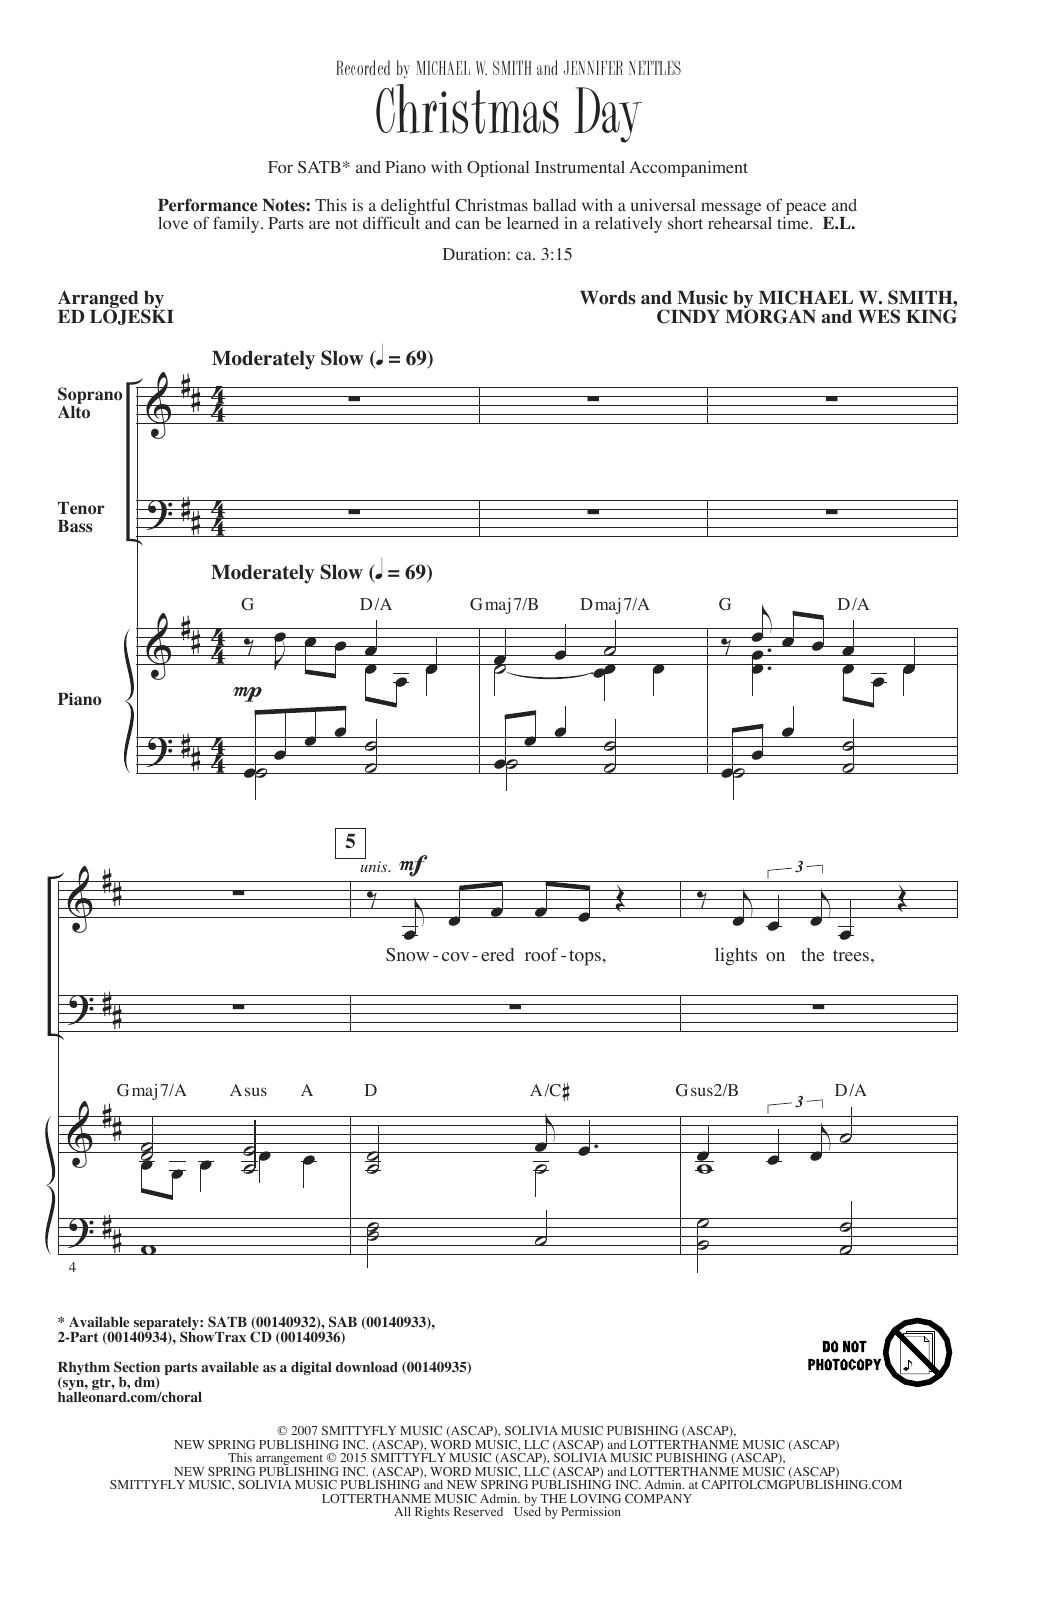 Ed Lojeski Christmas Day sheet music notes and chords arranged for SATB Choir